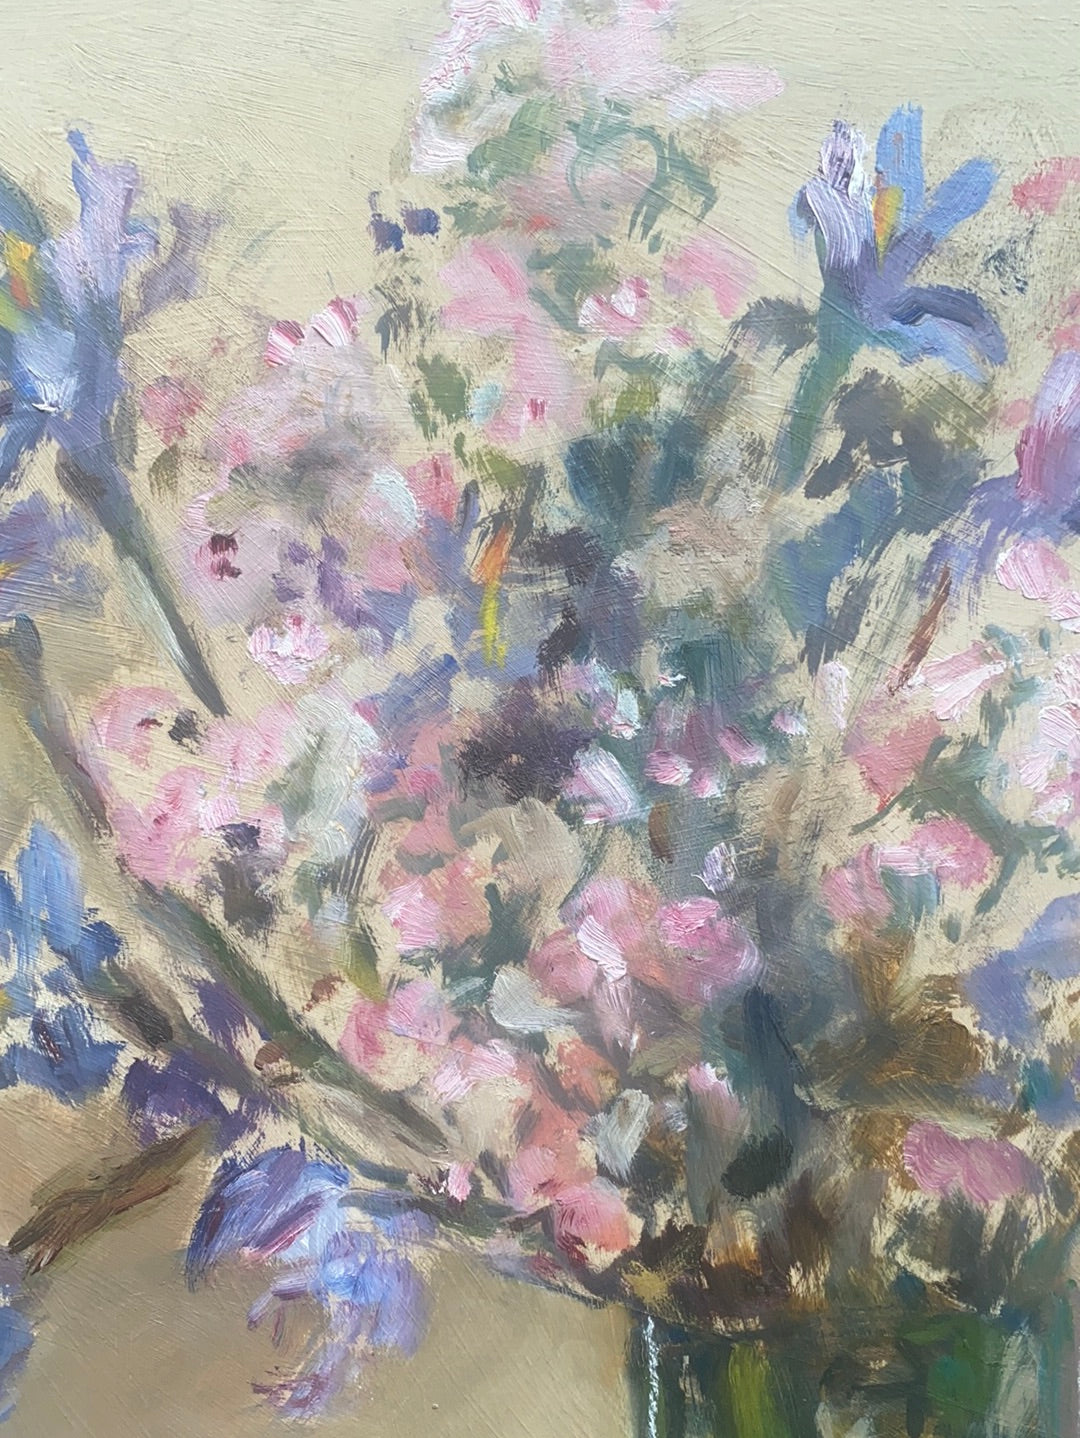 Vintage Iris & Cherry Blossoms Painting